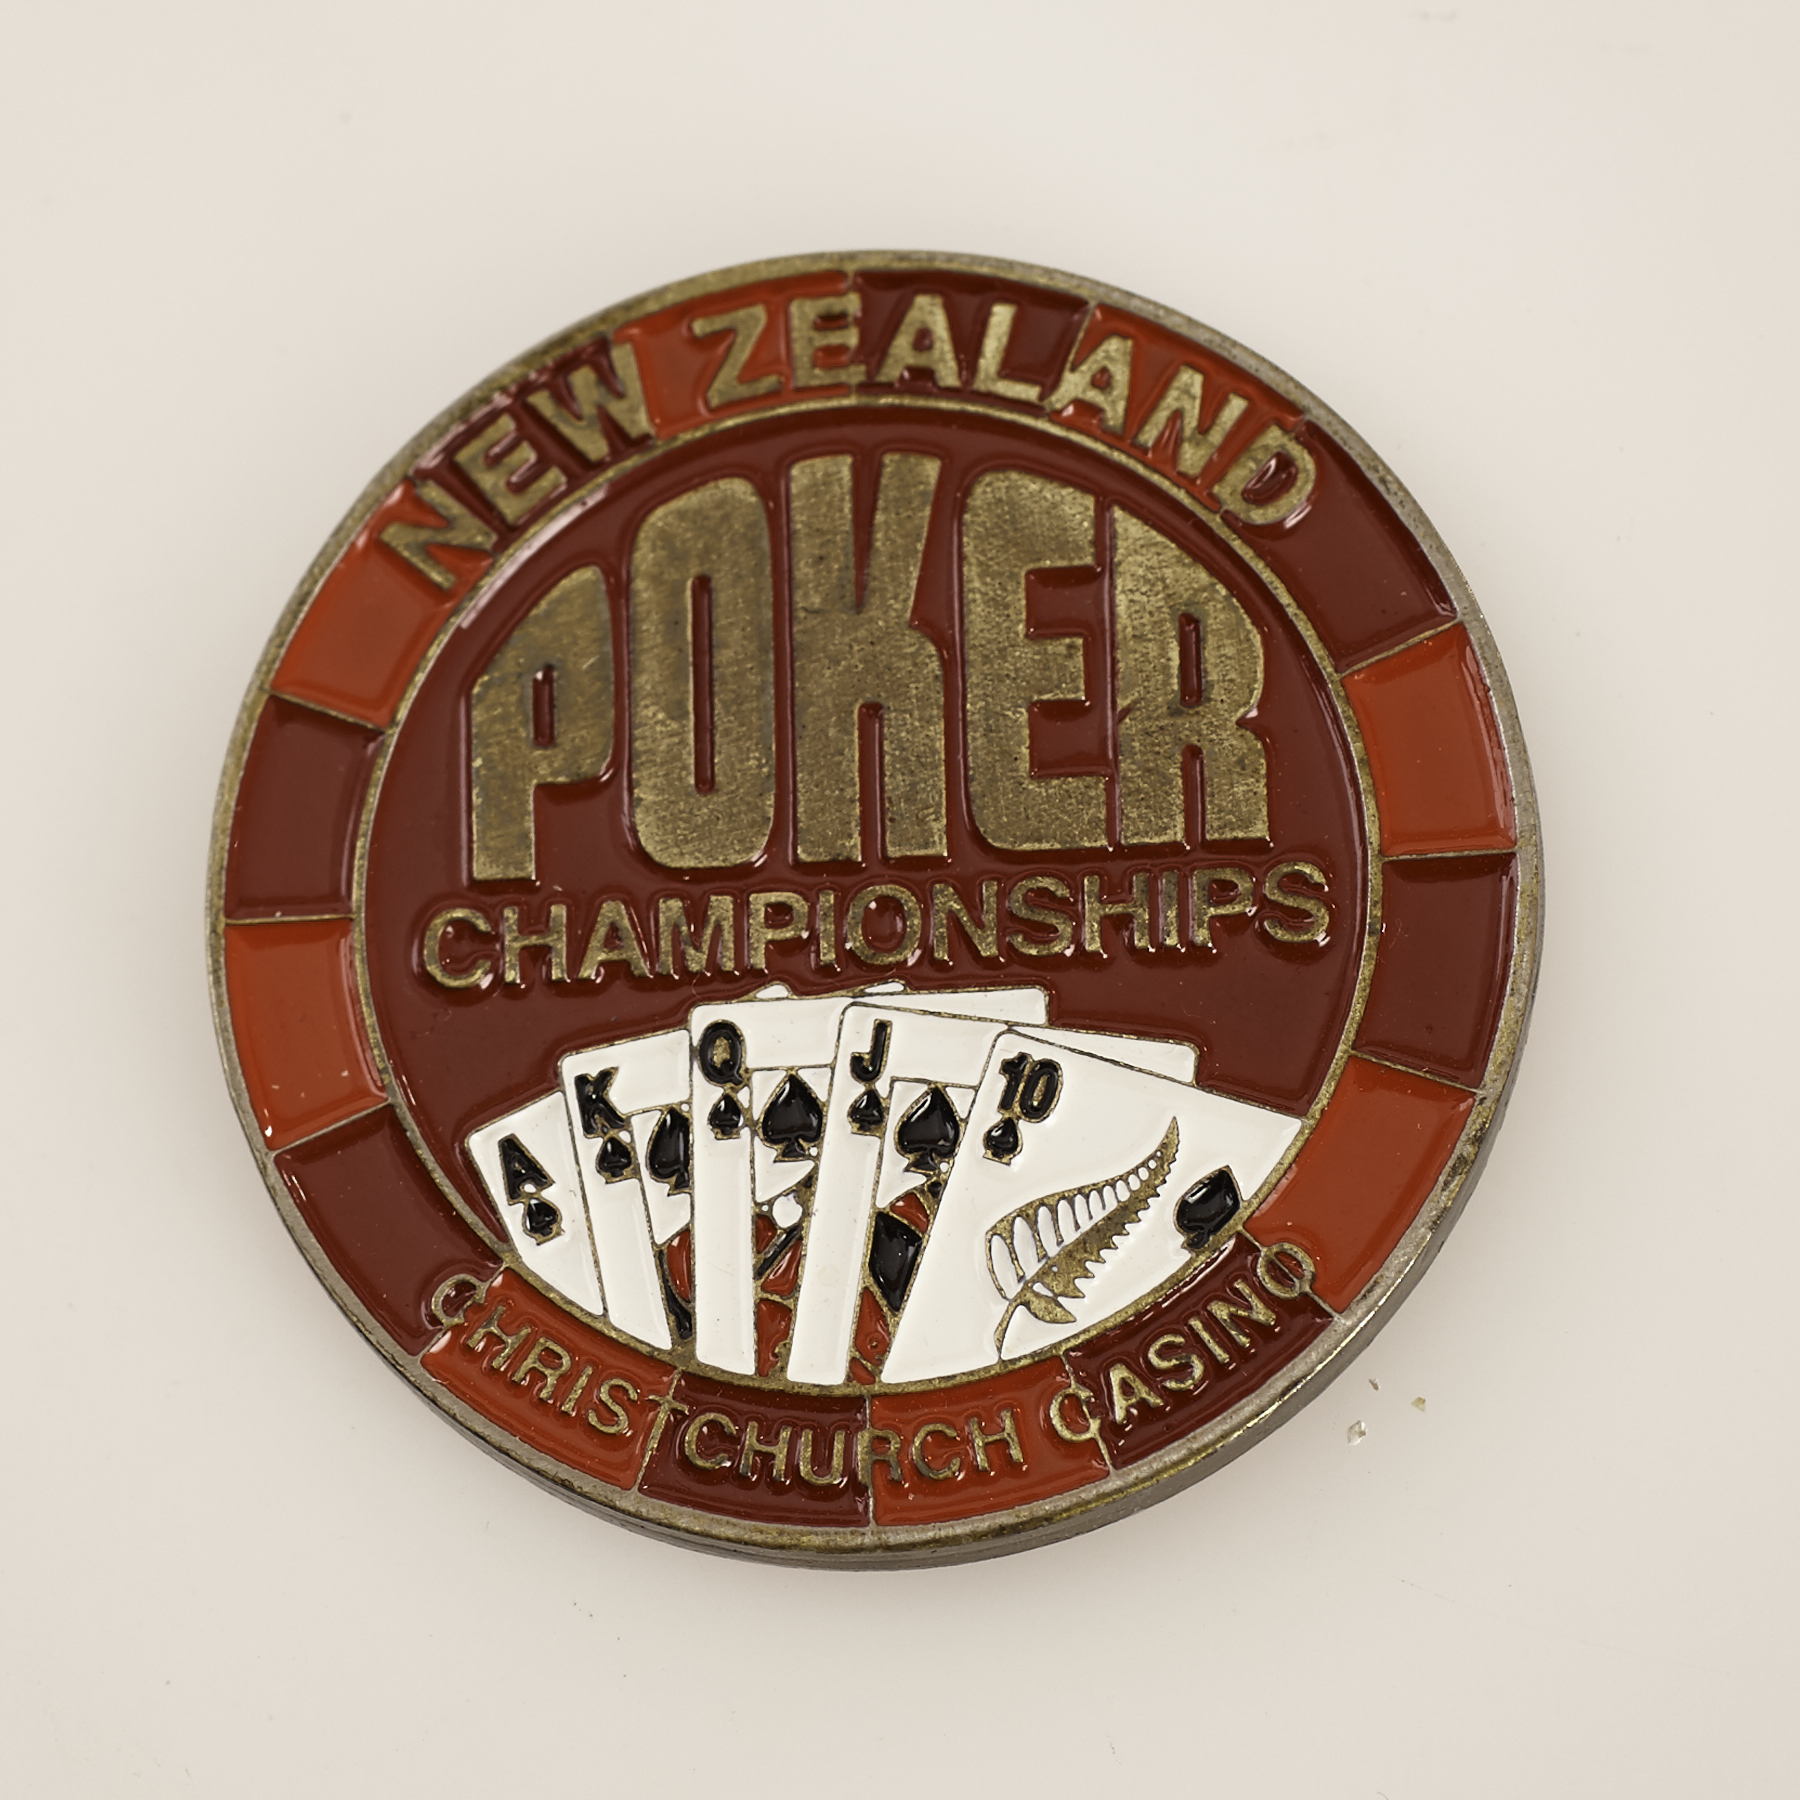 POKER CHAMPIONSHIPS, CHRISTCHURCH CASINO, New Zealand, Poker Card Guard